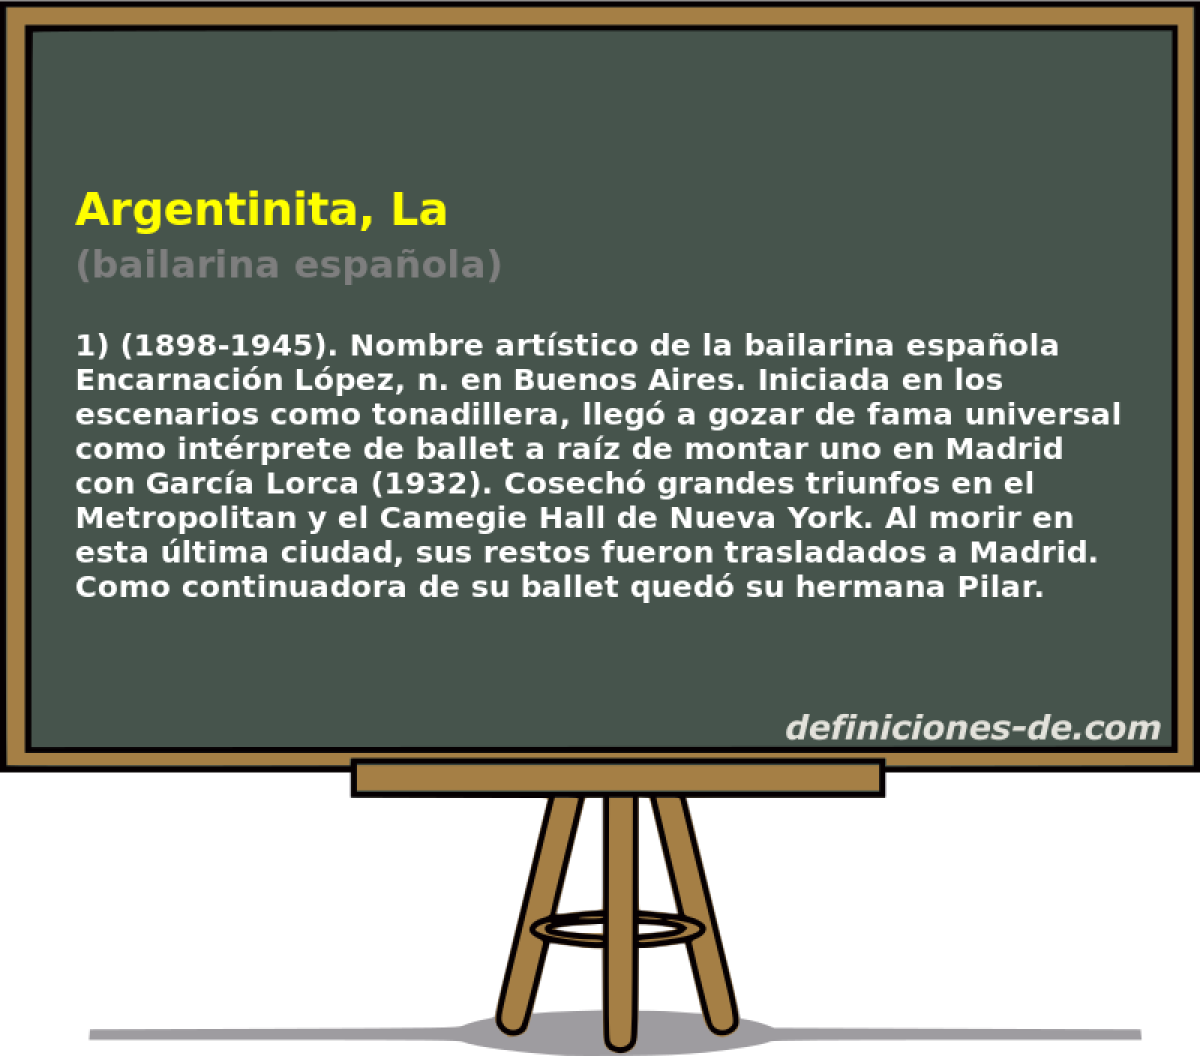 Argentinita, La (bailarina espaola)